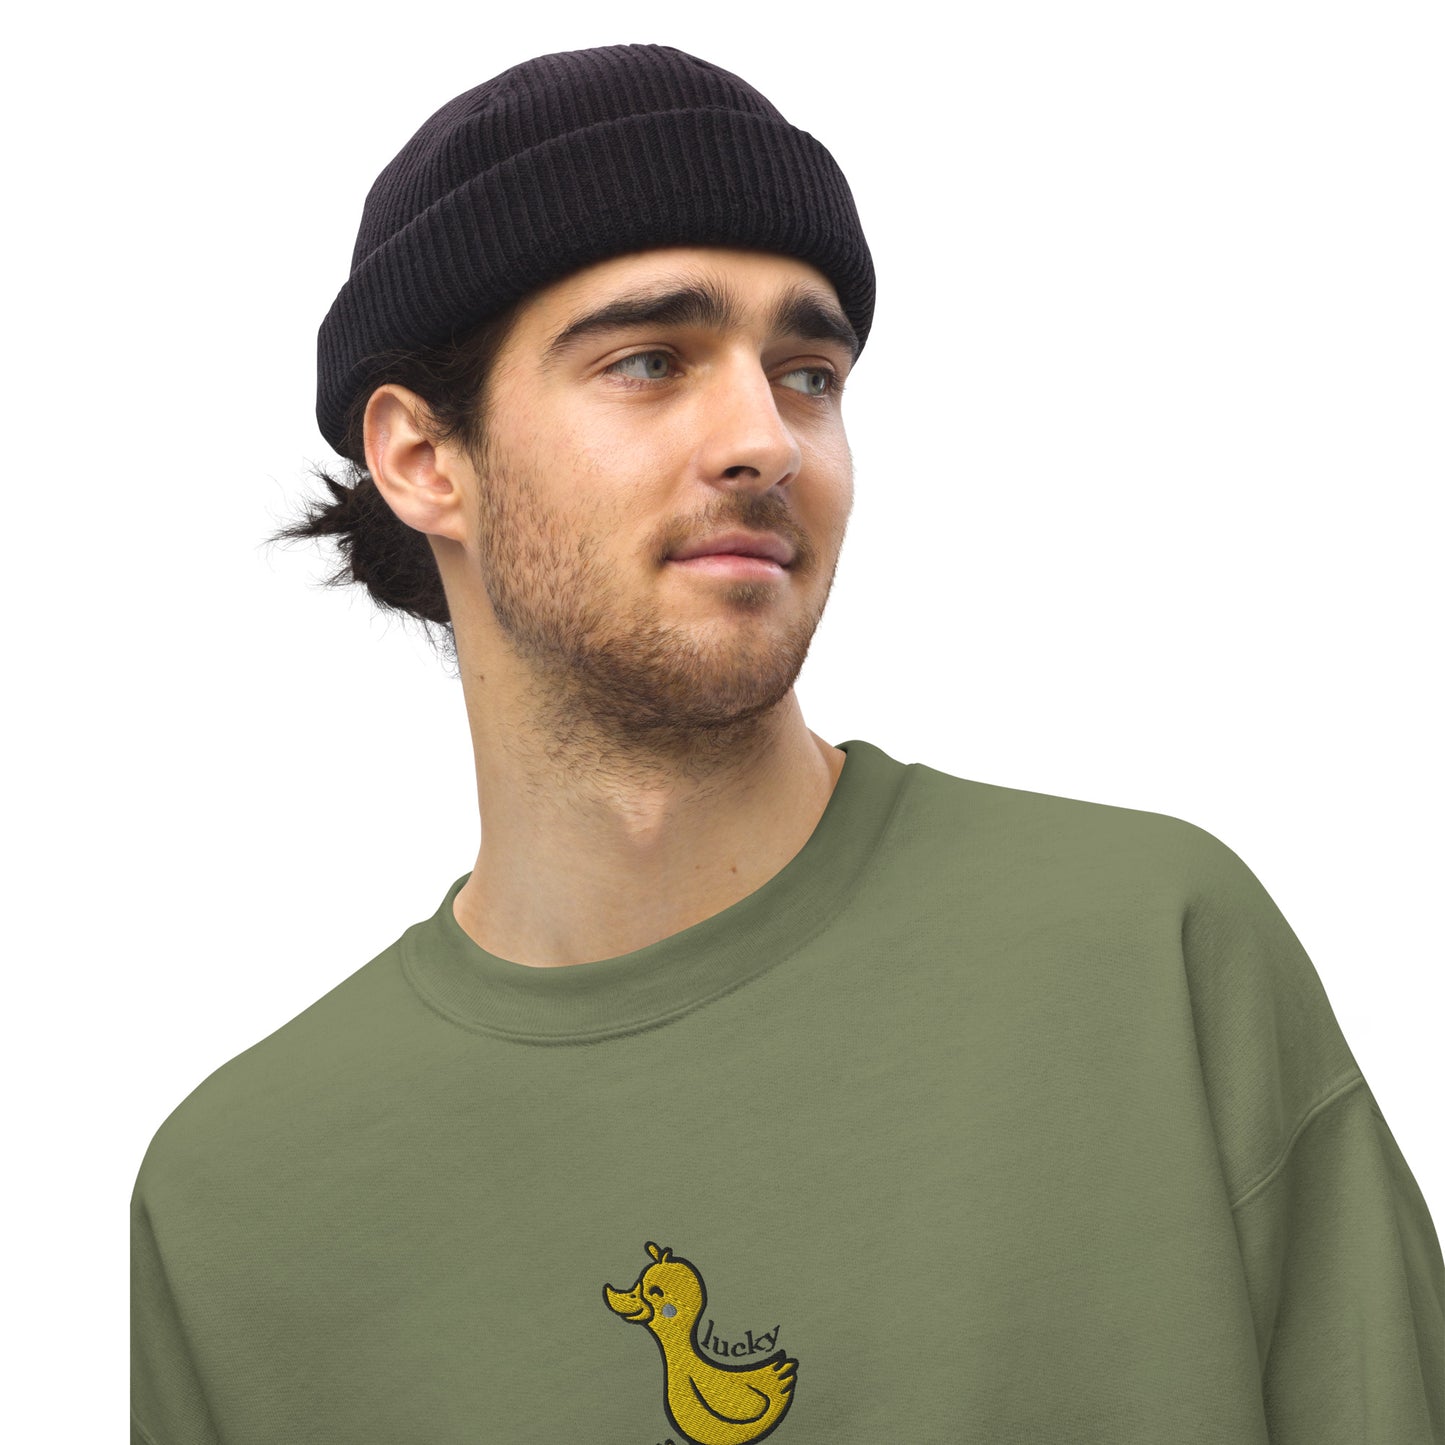 Lucky Duck Embroidered Unisex Sweatshirt